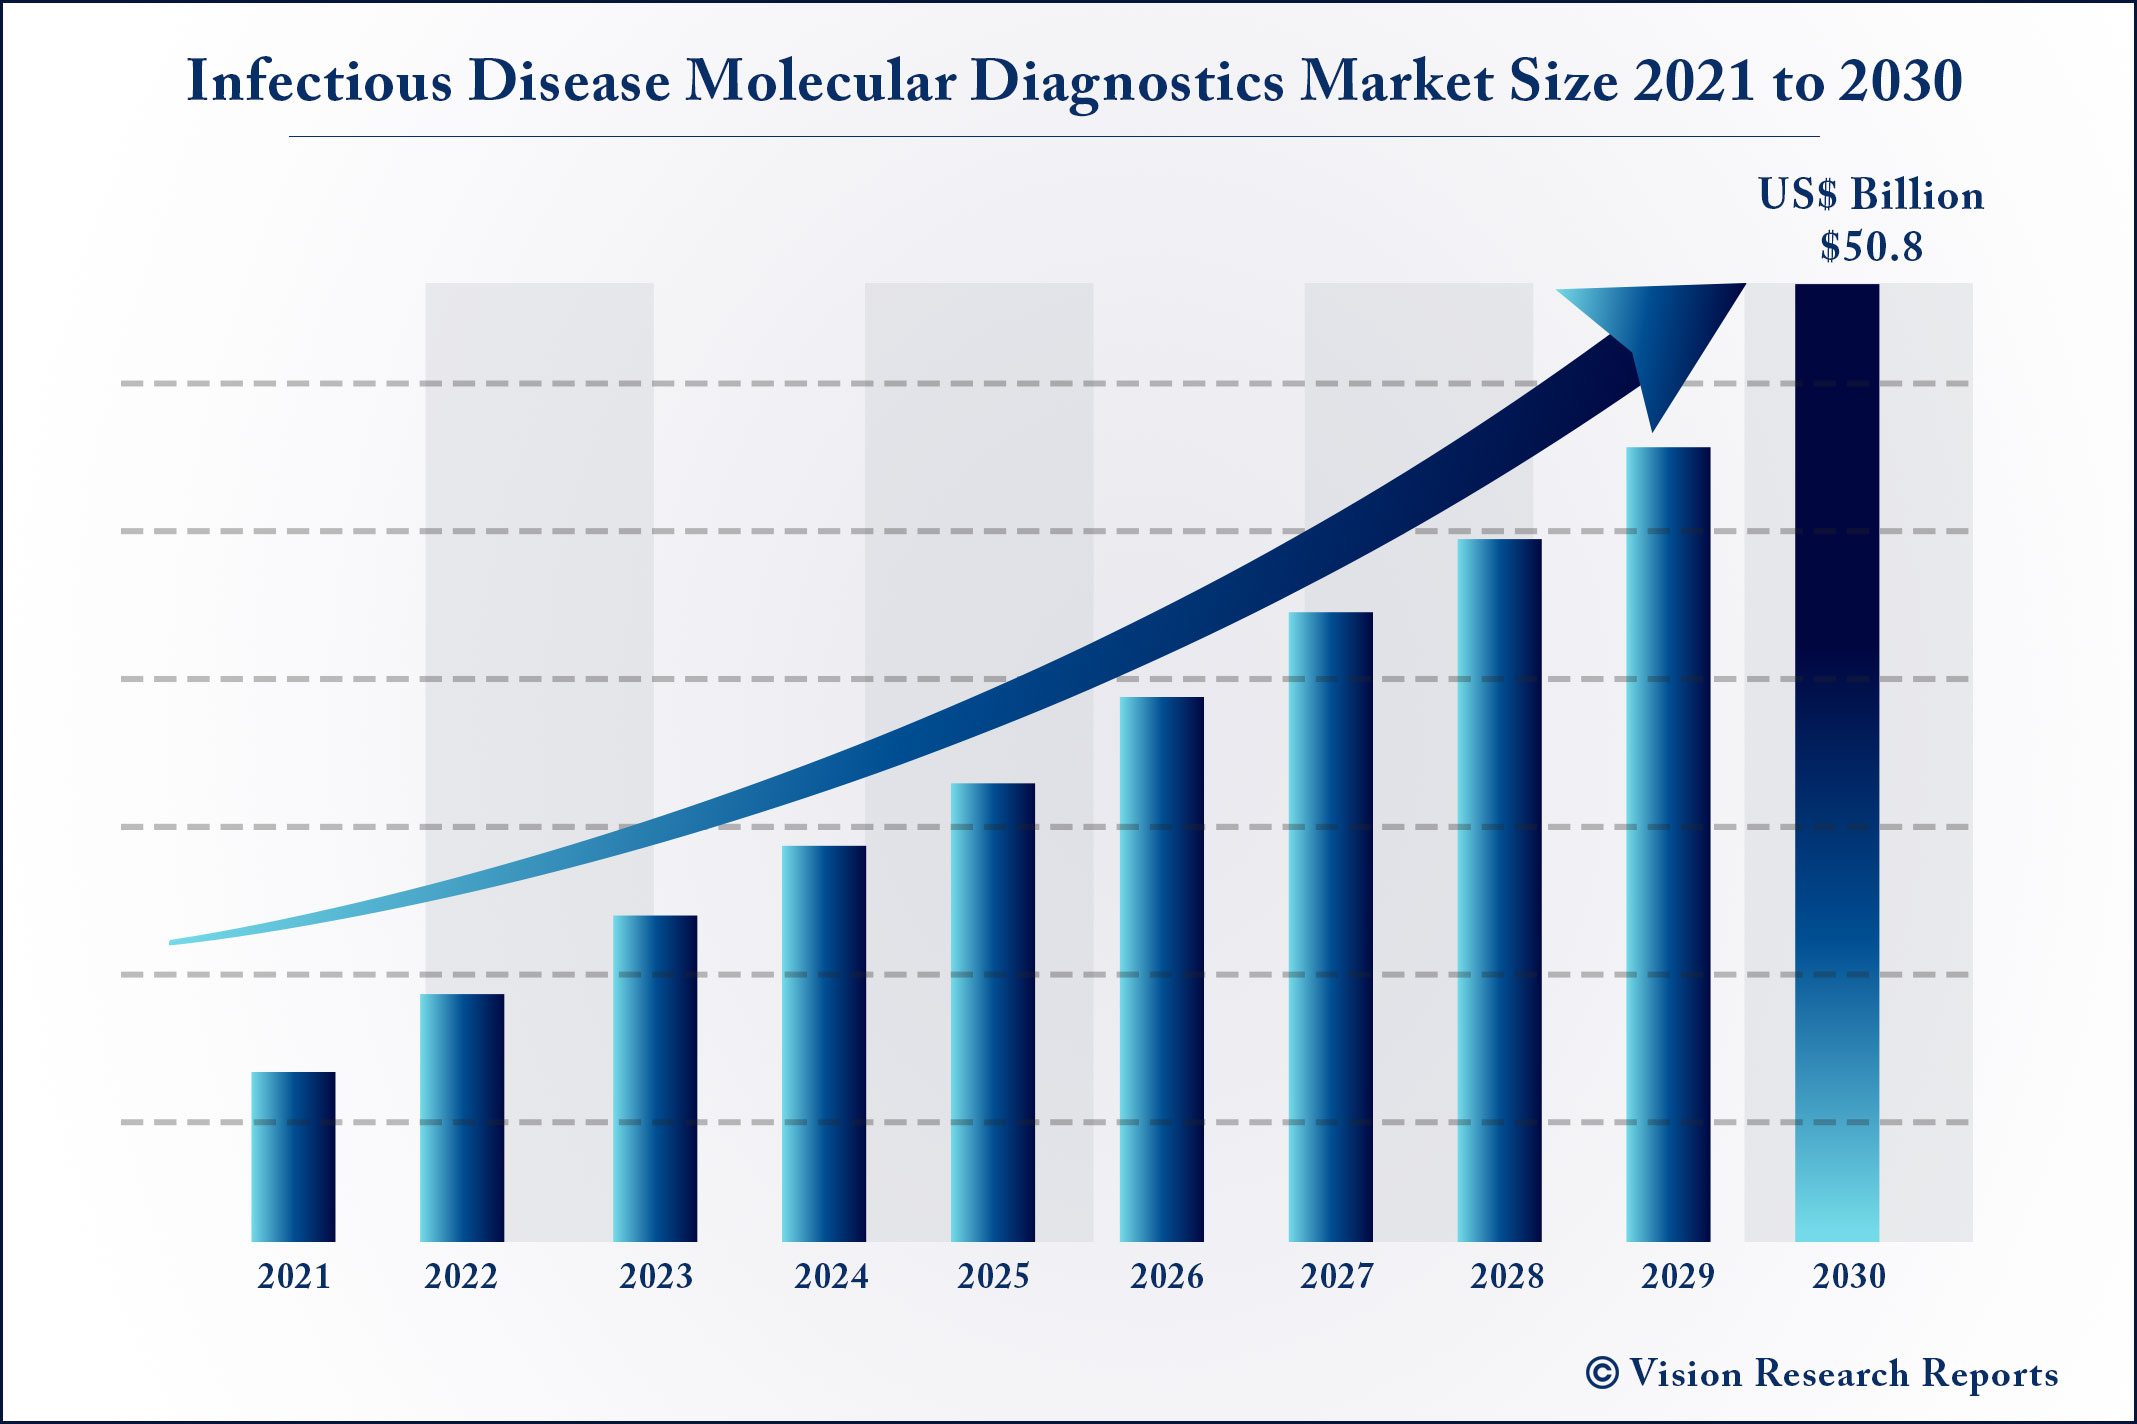 Infectious Disease Molecular Diagnostics Market Size 2021 to 2030